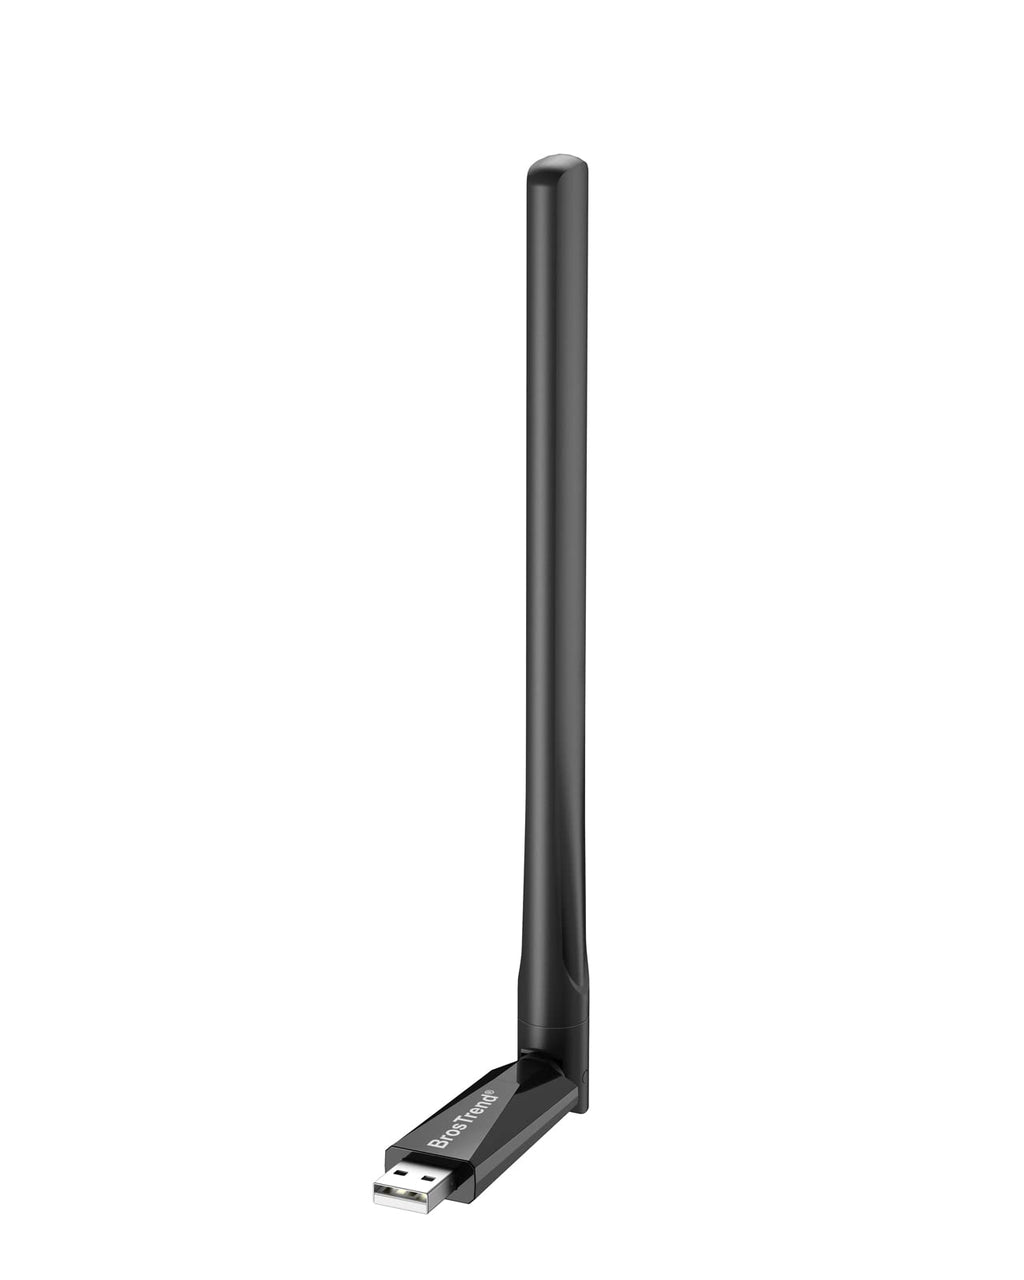  [AUSTRALIA] - BrosTrend 650Mbps Linux Compatible WiFi Adapter Supports Kali Linux, Ubuntu, Mint, Debian, Kubuntu, Zorin, PureOS, Raspberry Pi 2+, Windows, Dual Band USB Wireless Adapter w/ Long Range WiFi Antenna